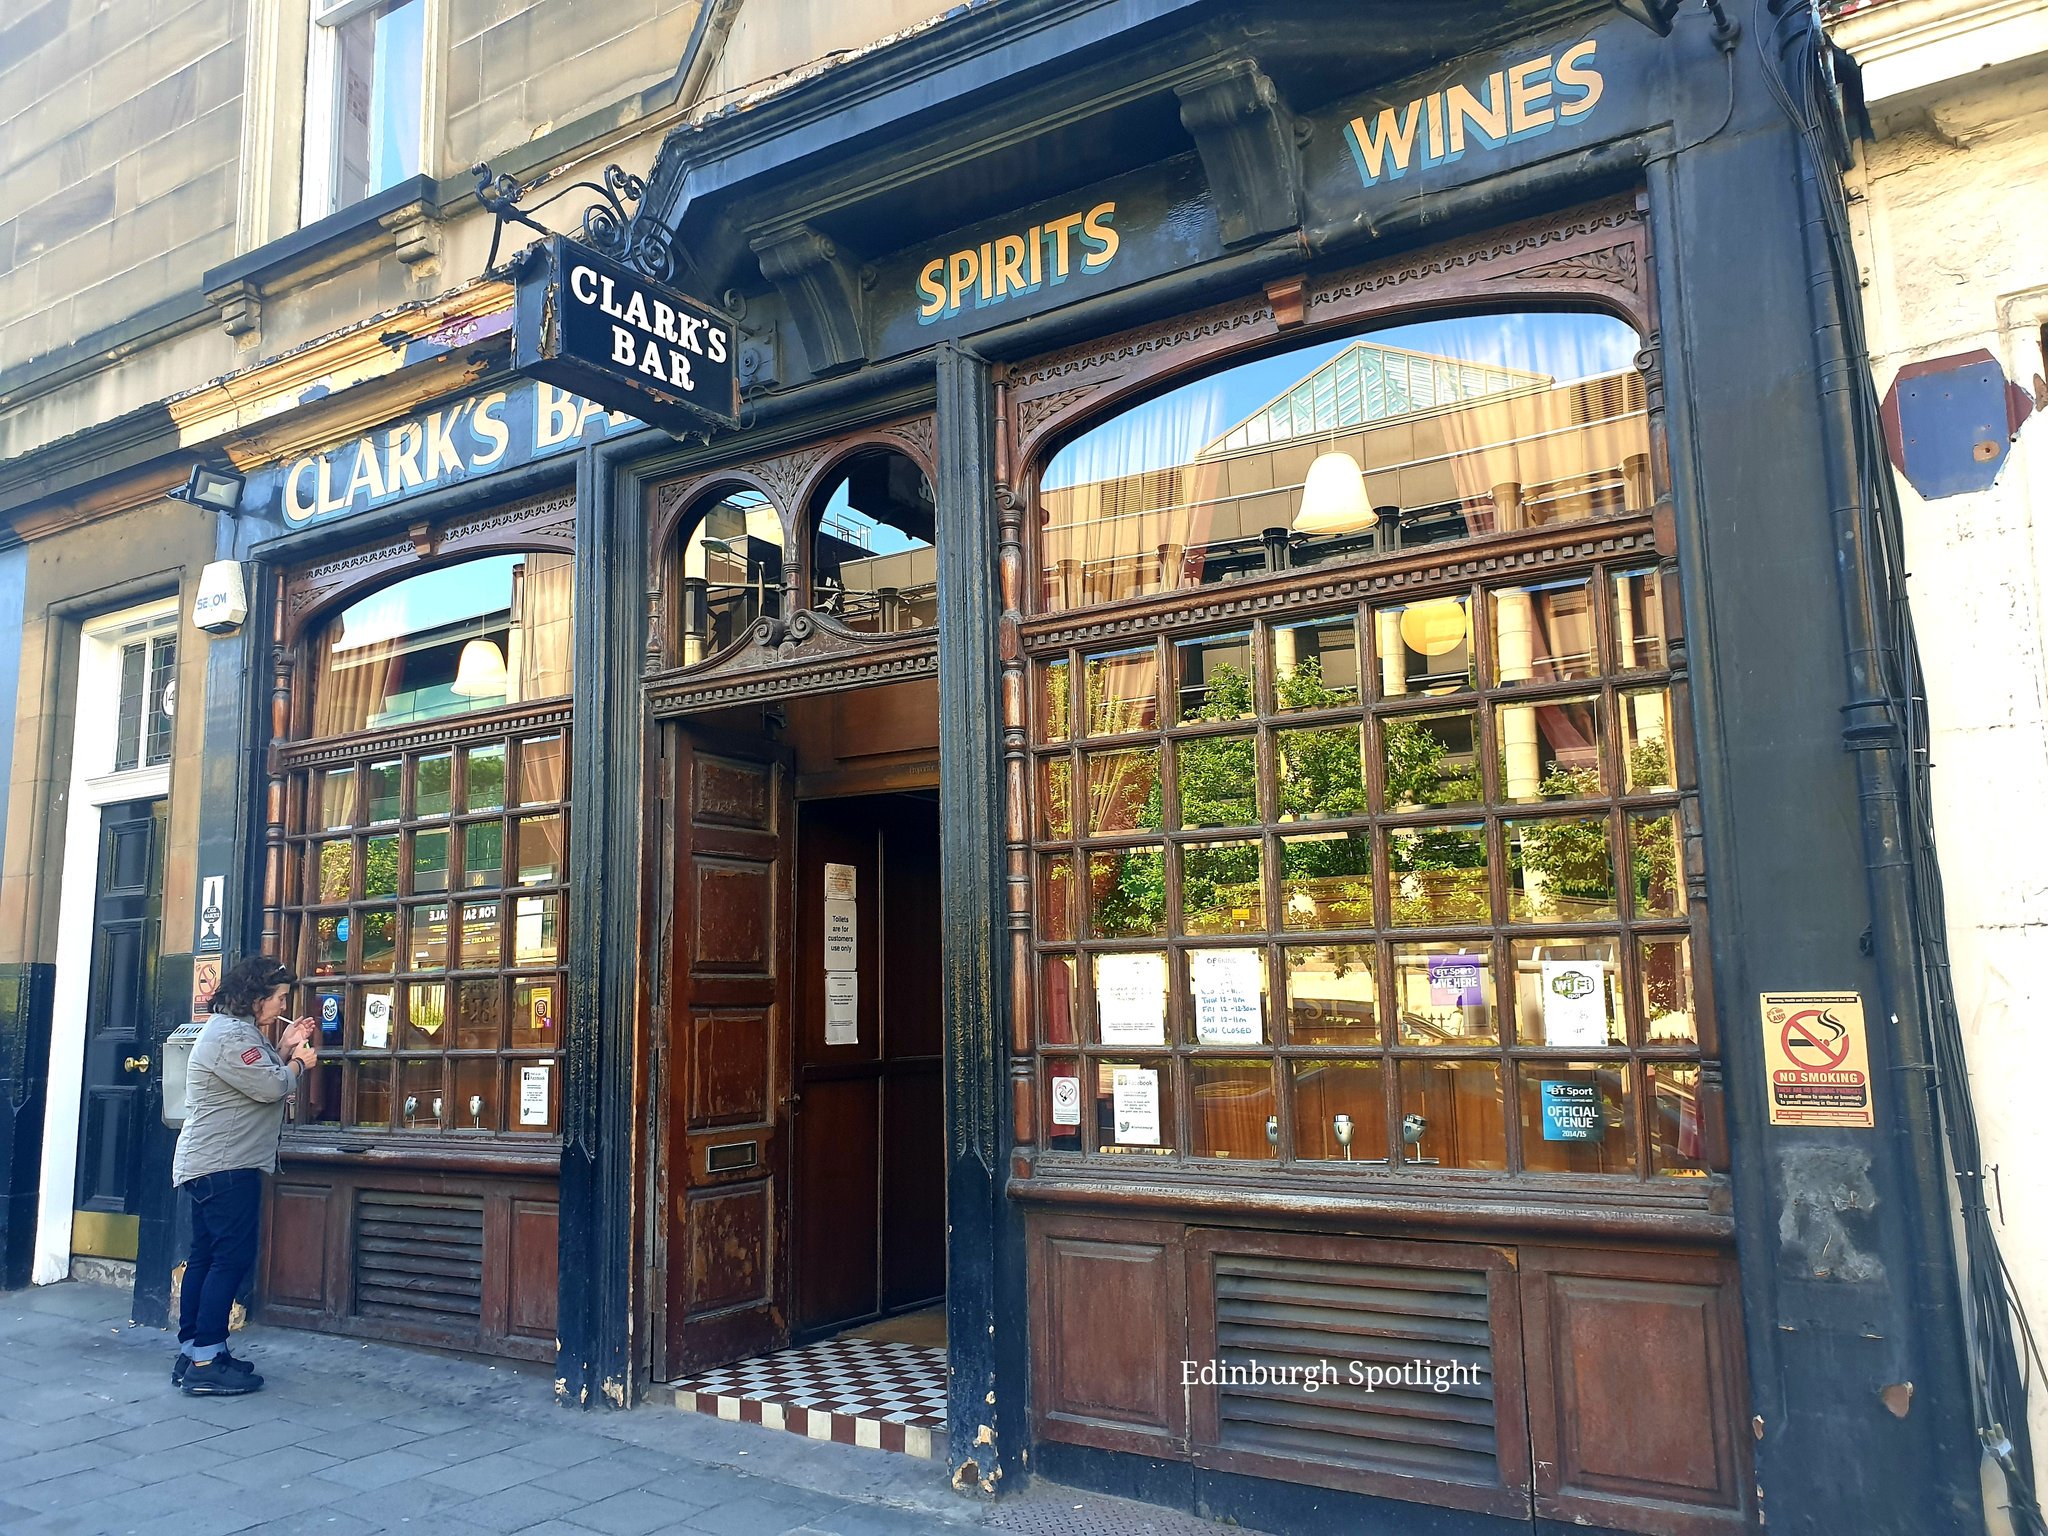 Edinburgh Spotlight on "Via @thedreadedlurgy we can confirm that Clark's Bar on Dundas Steeet closes its doors tomorrow night 😥 #endofanera https://t.co/Y5xkRDUvqD" / Twitter